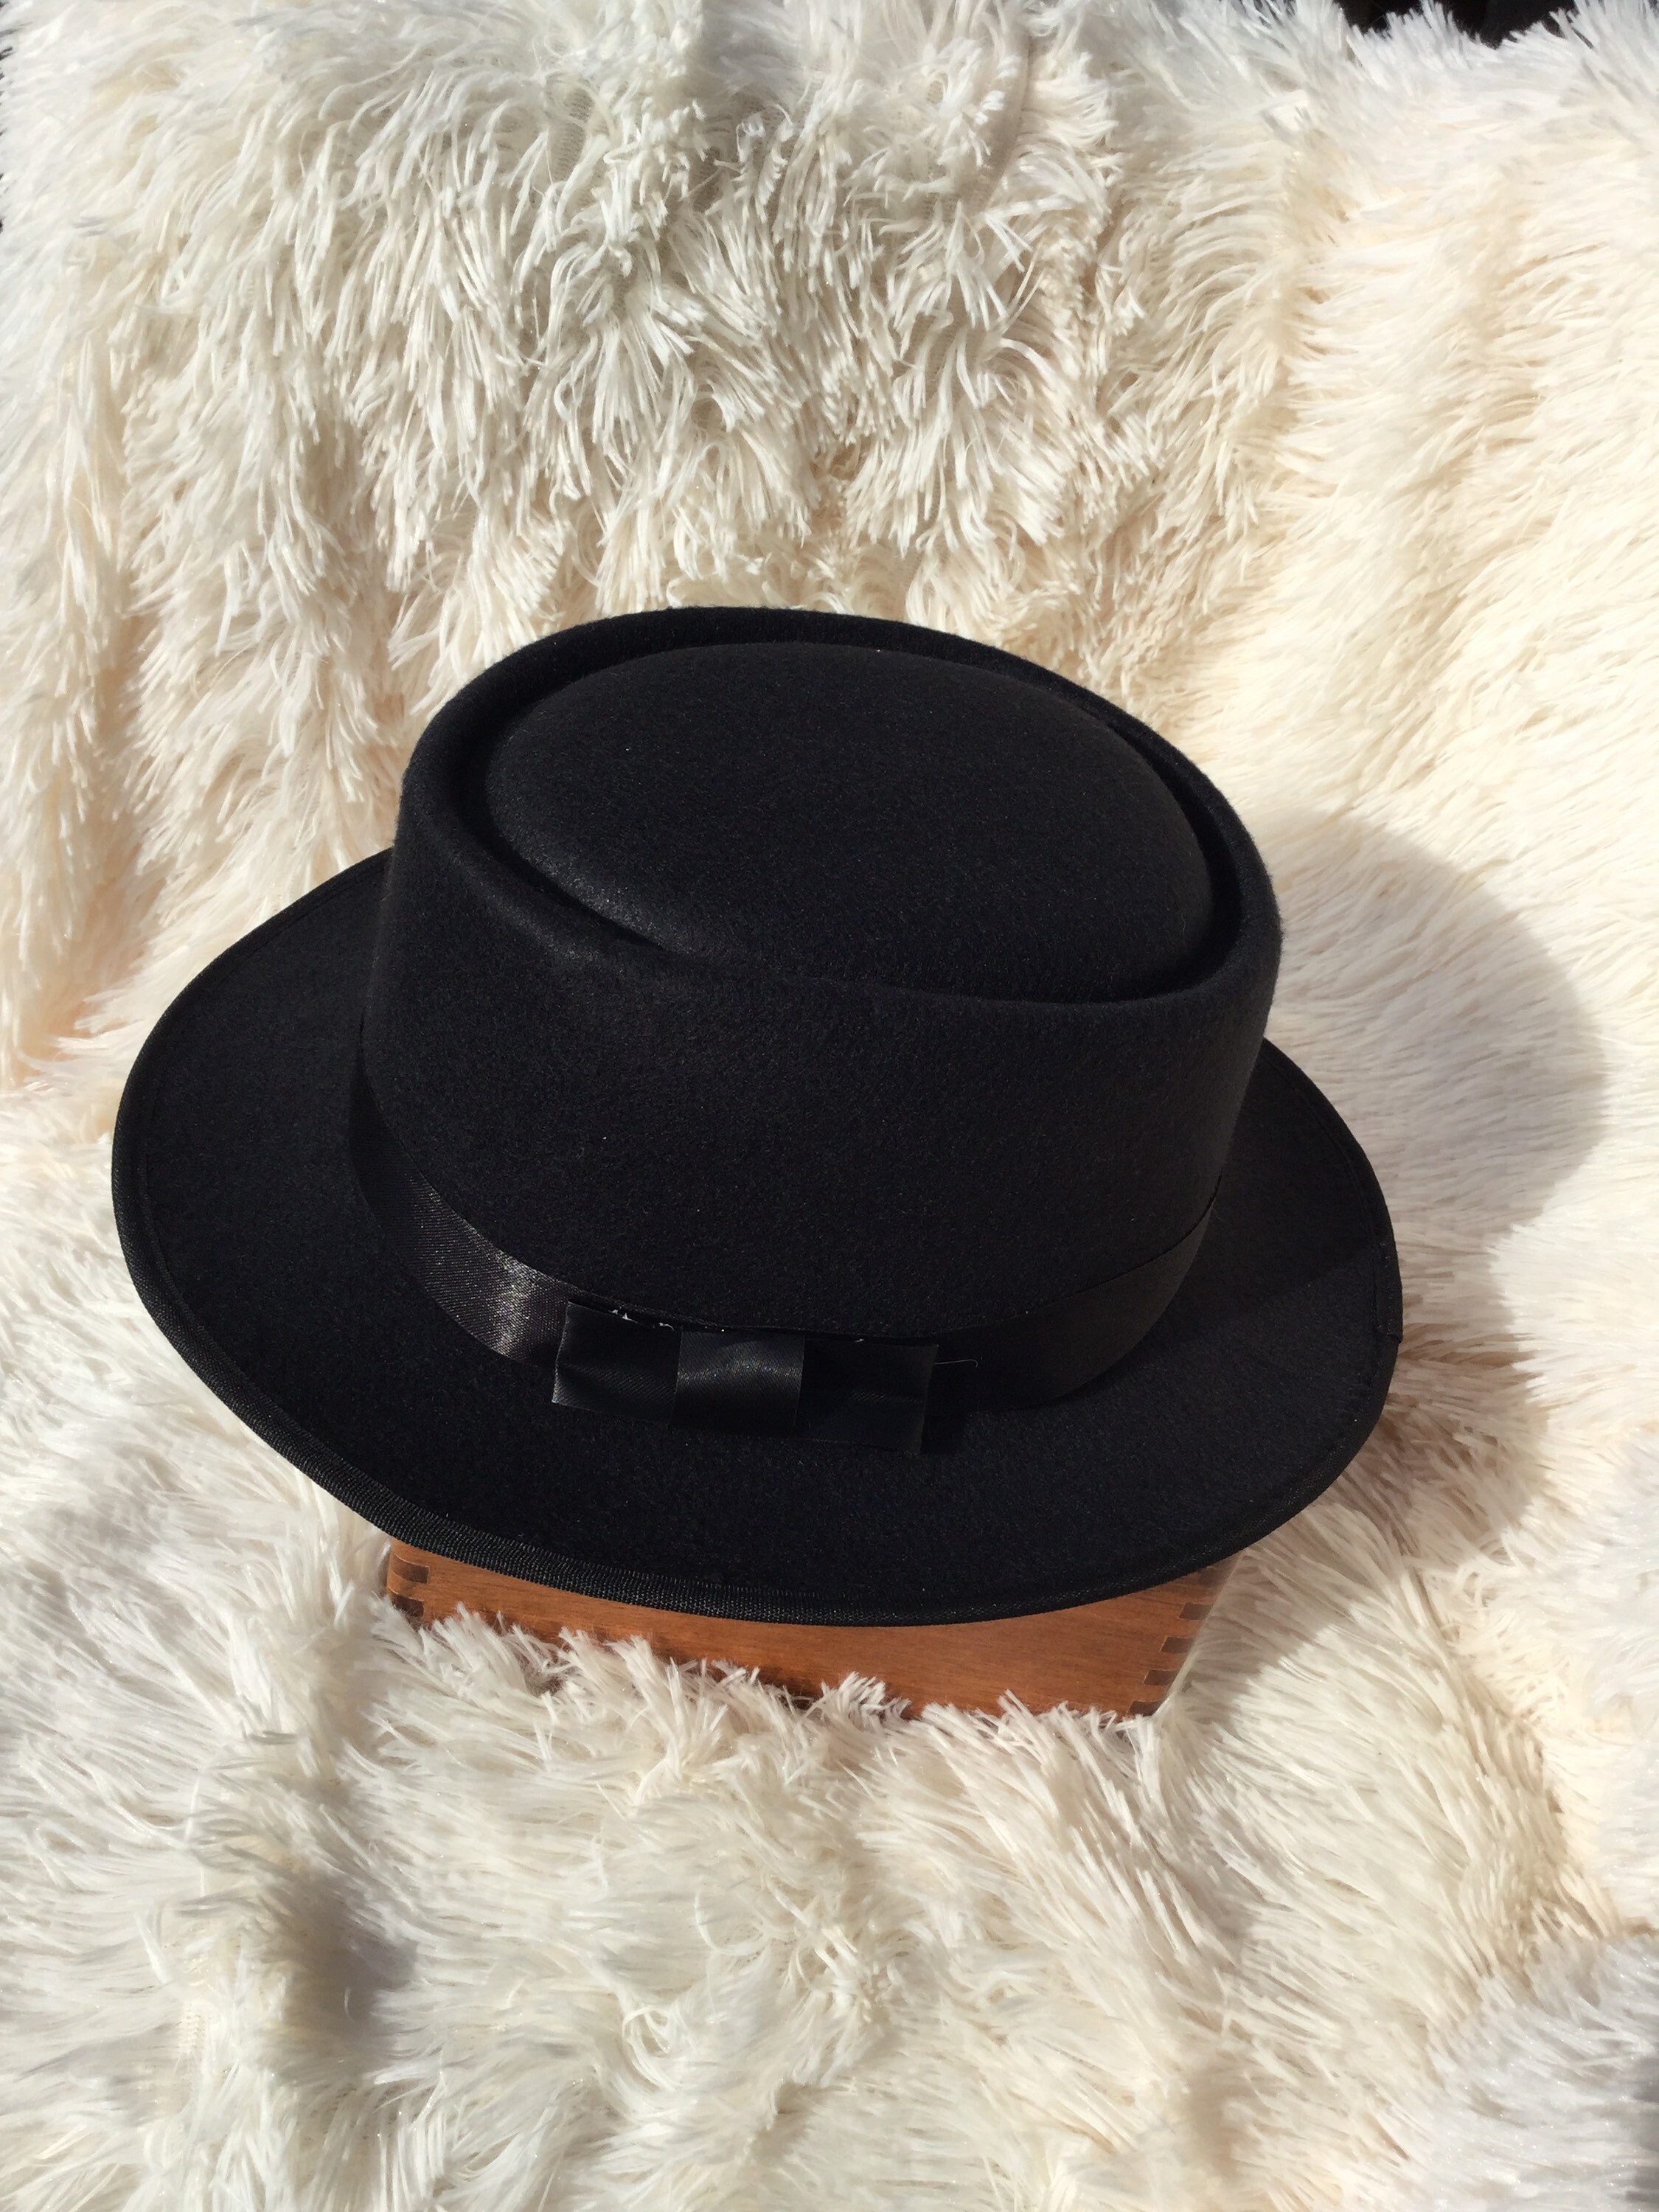 UpriverStudios Quality Pork Pie Musician Hat Medium Felt Black | Etsy